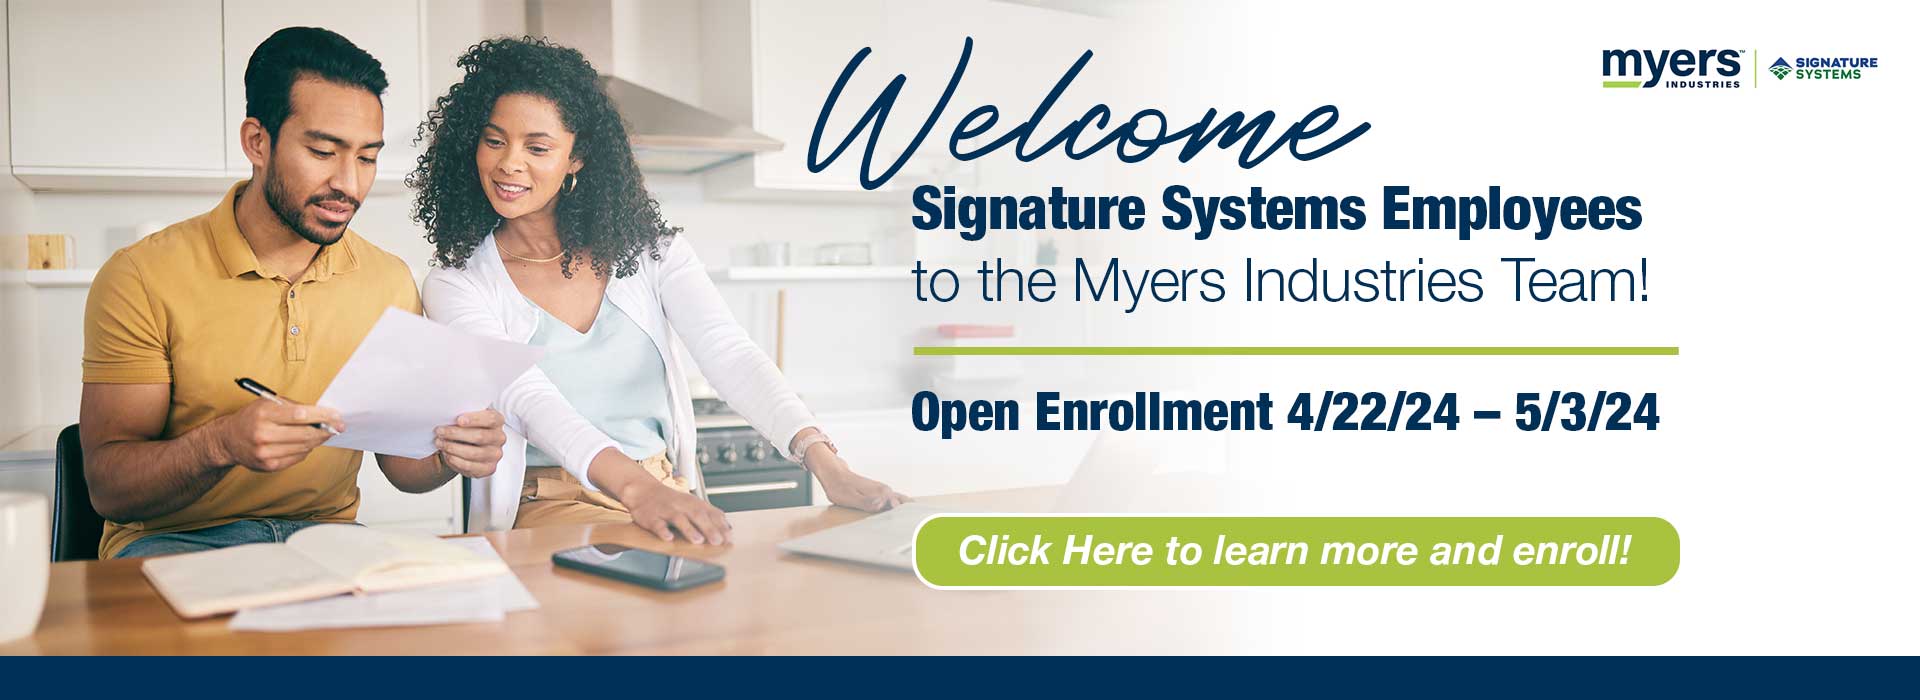 Myers_WebsiteSlider_SignatureOE